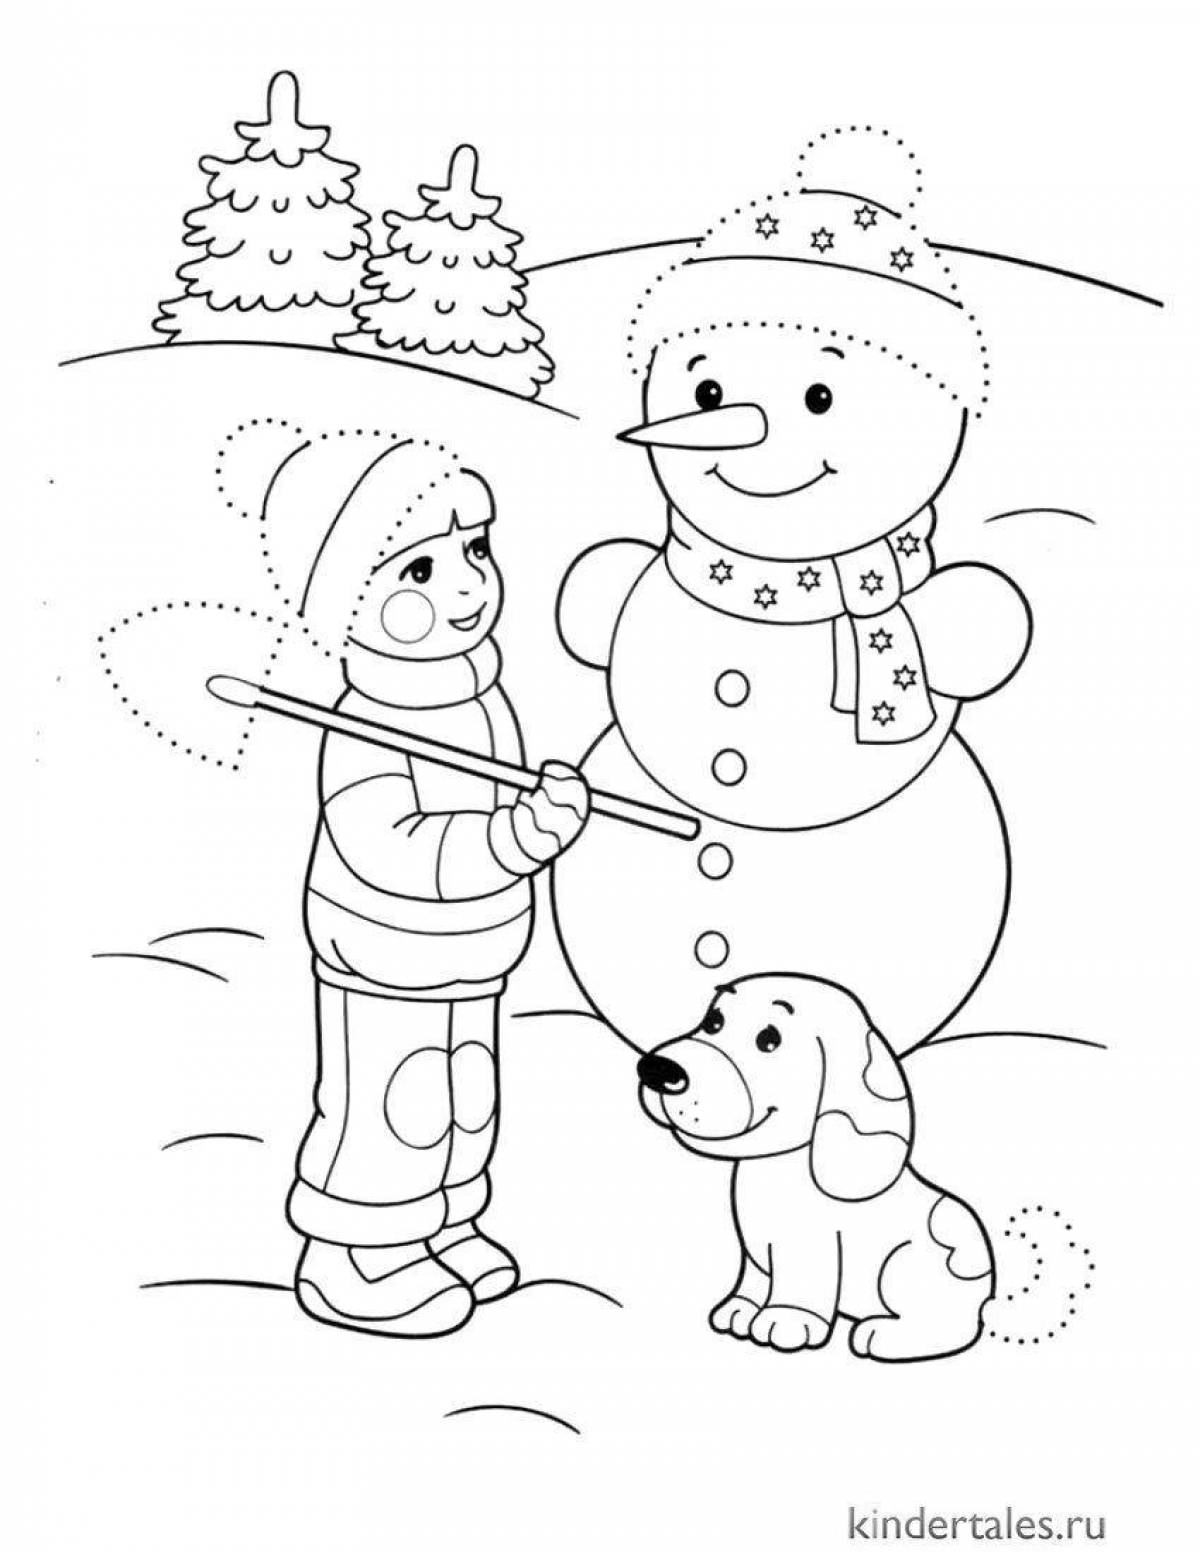 Shiny winter coloring book for preschoolers